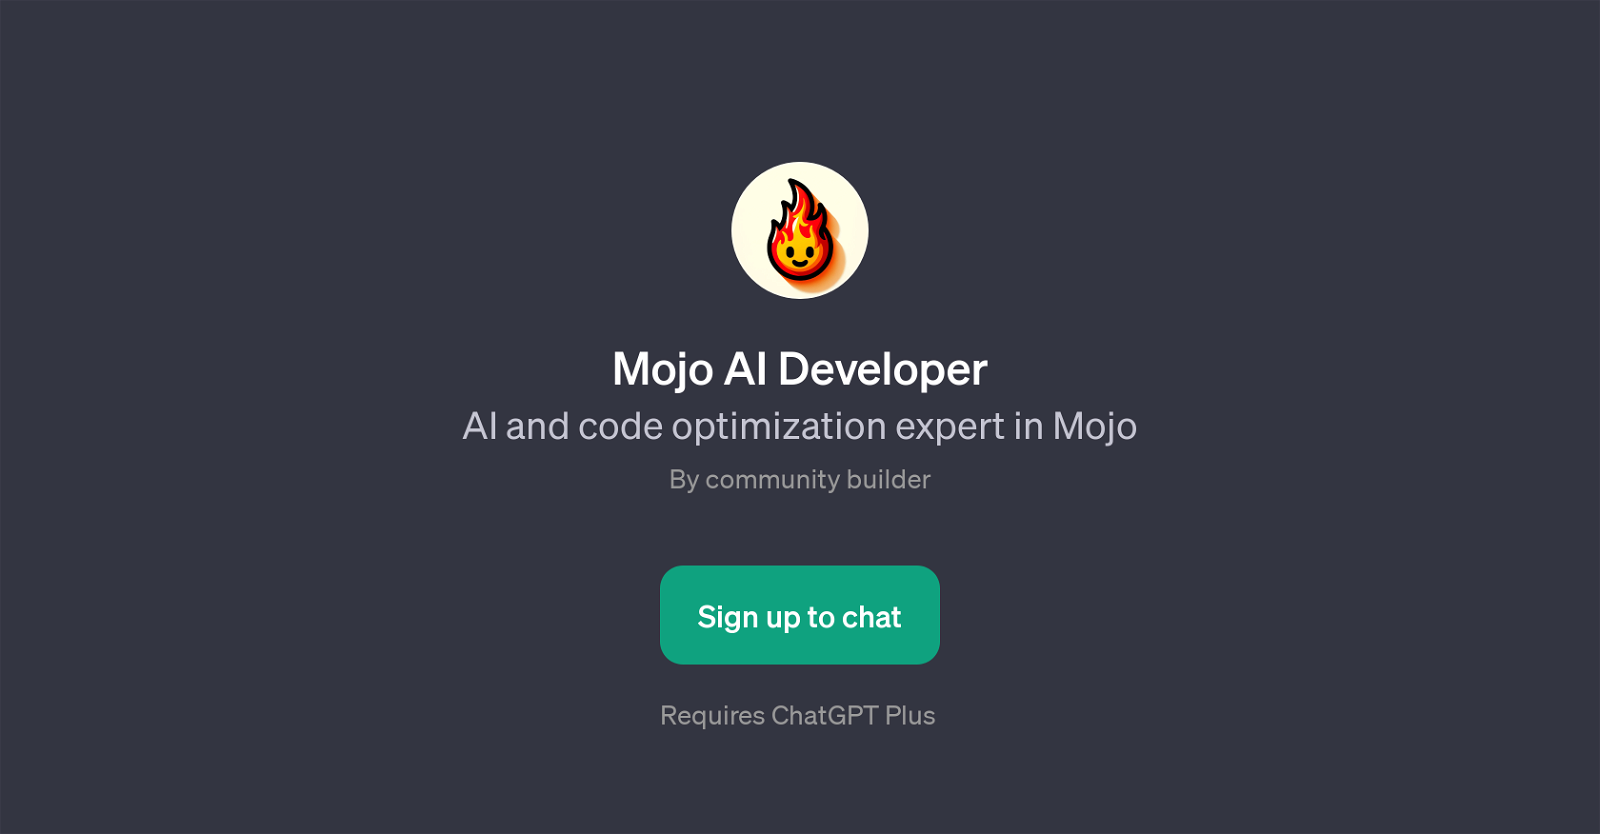 Mojo AI Developer website